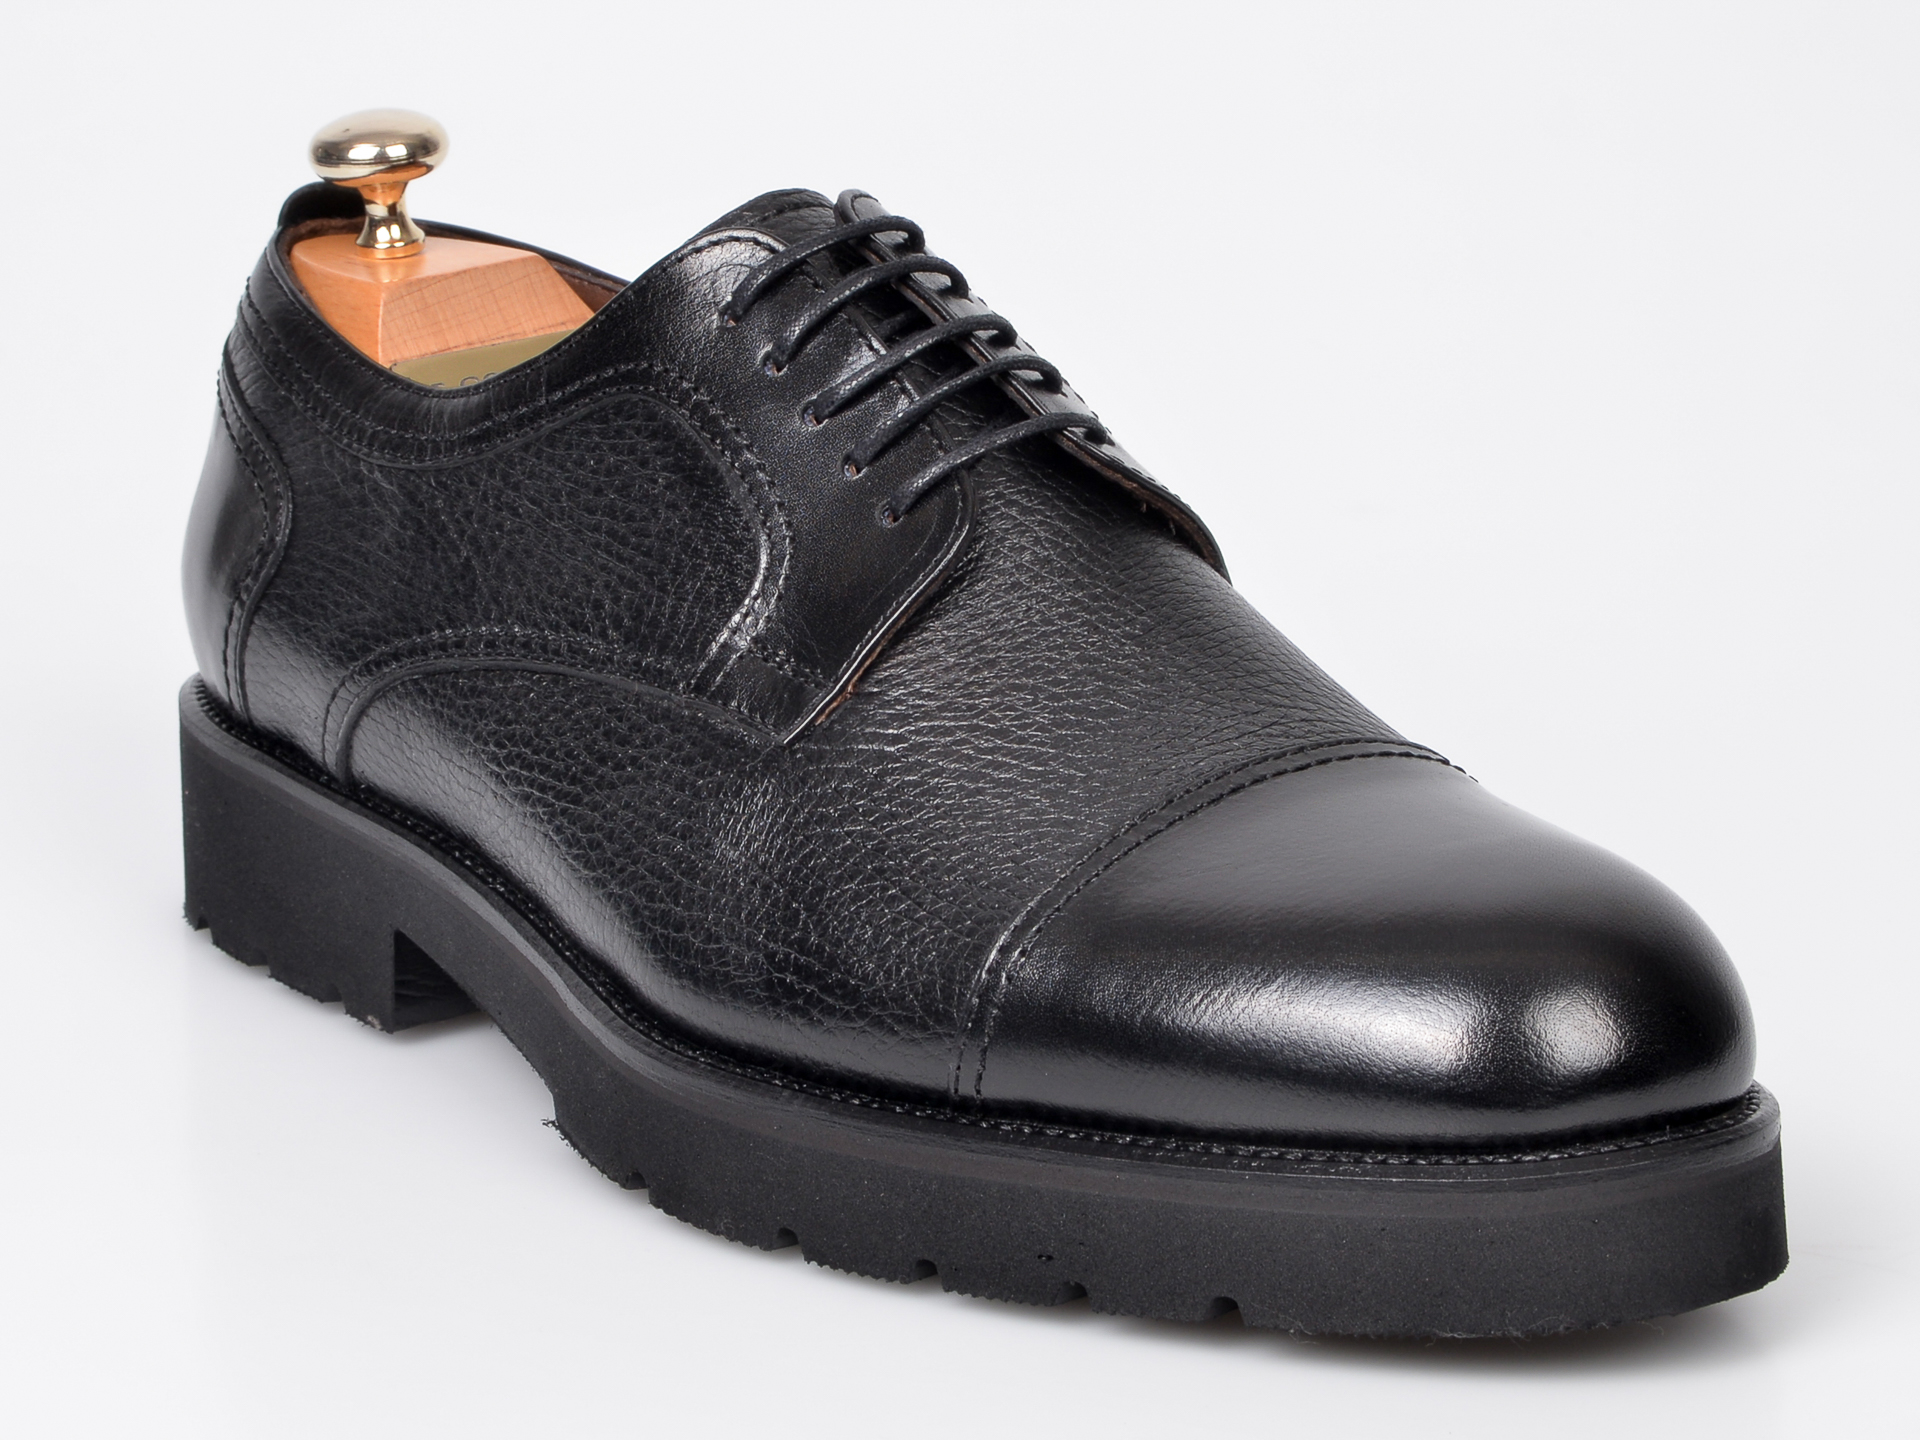 Pantofi LE COLONEL negri, 49117, din piele naturala